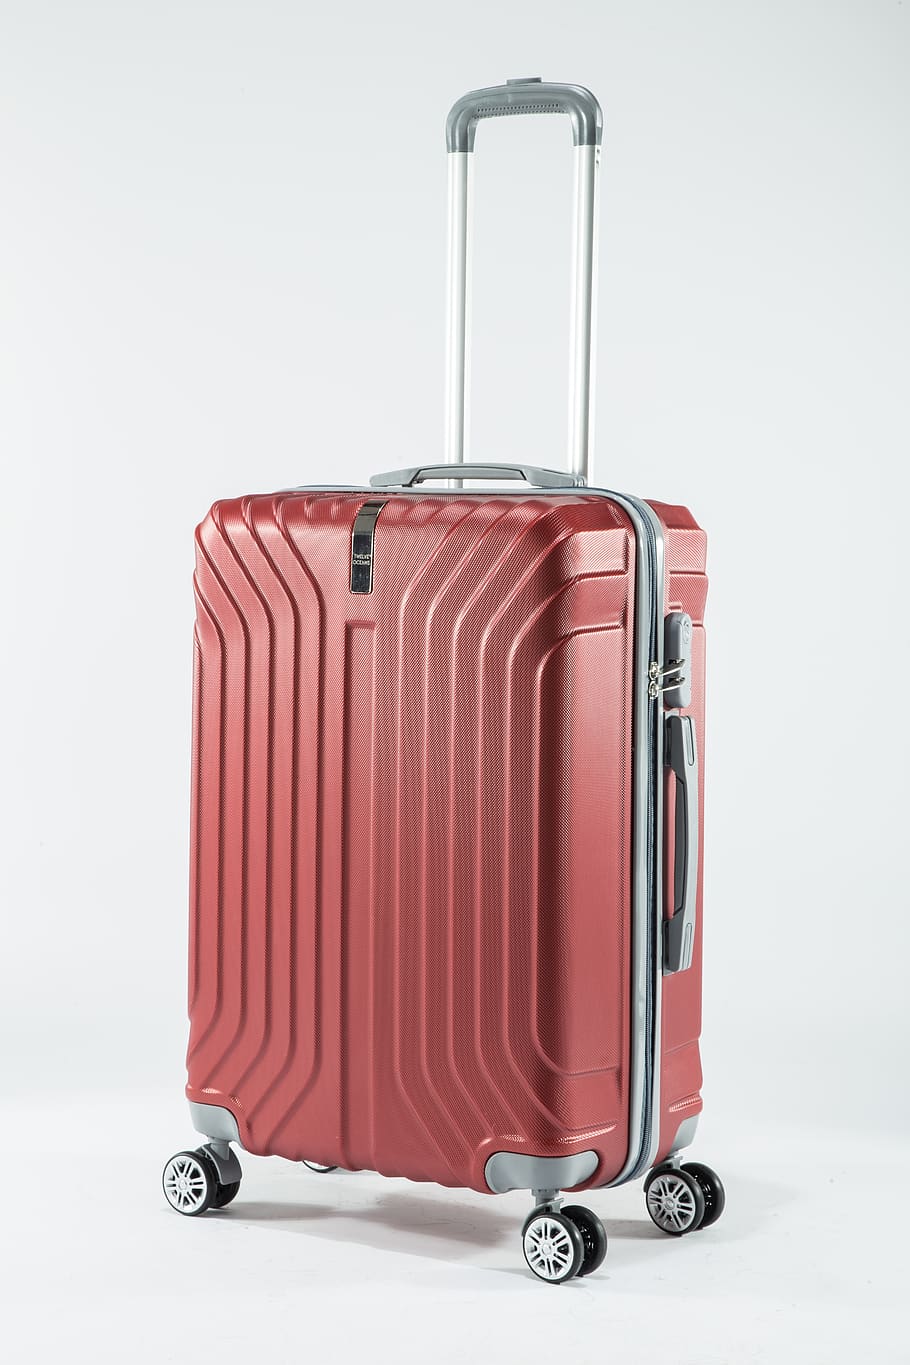 travel bag, hard and, bag, luggage, suitcase, travel, indoors, white background, cut out, wheeled luggage